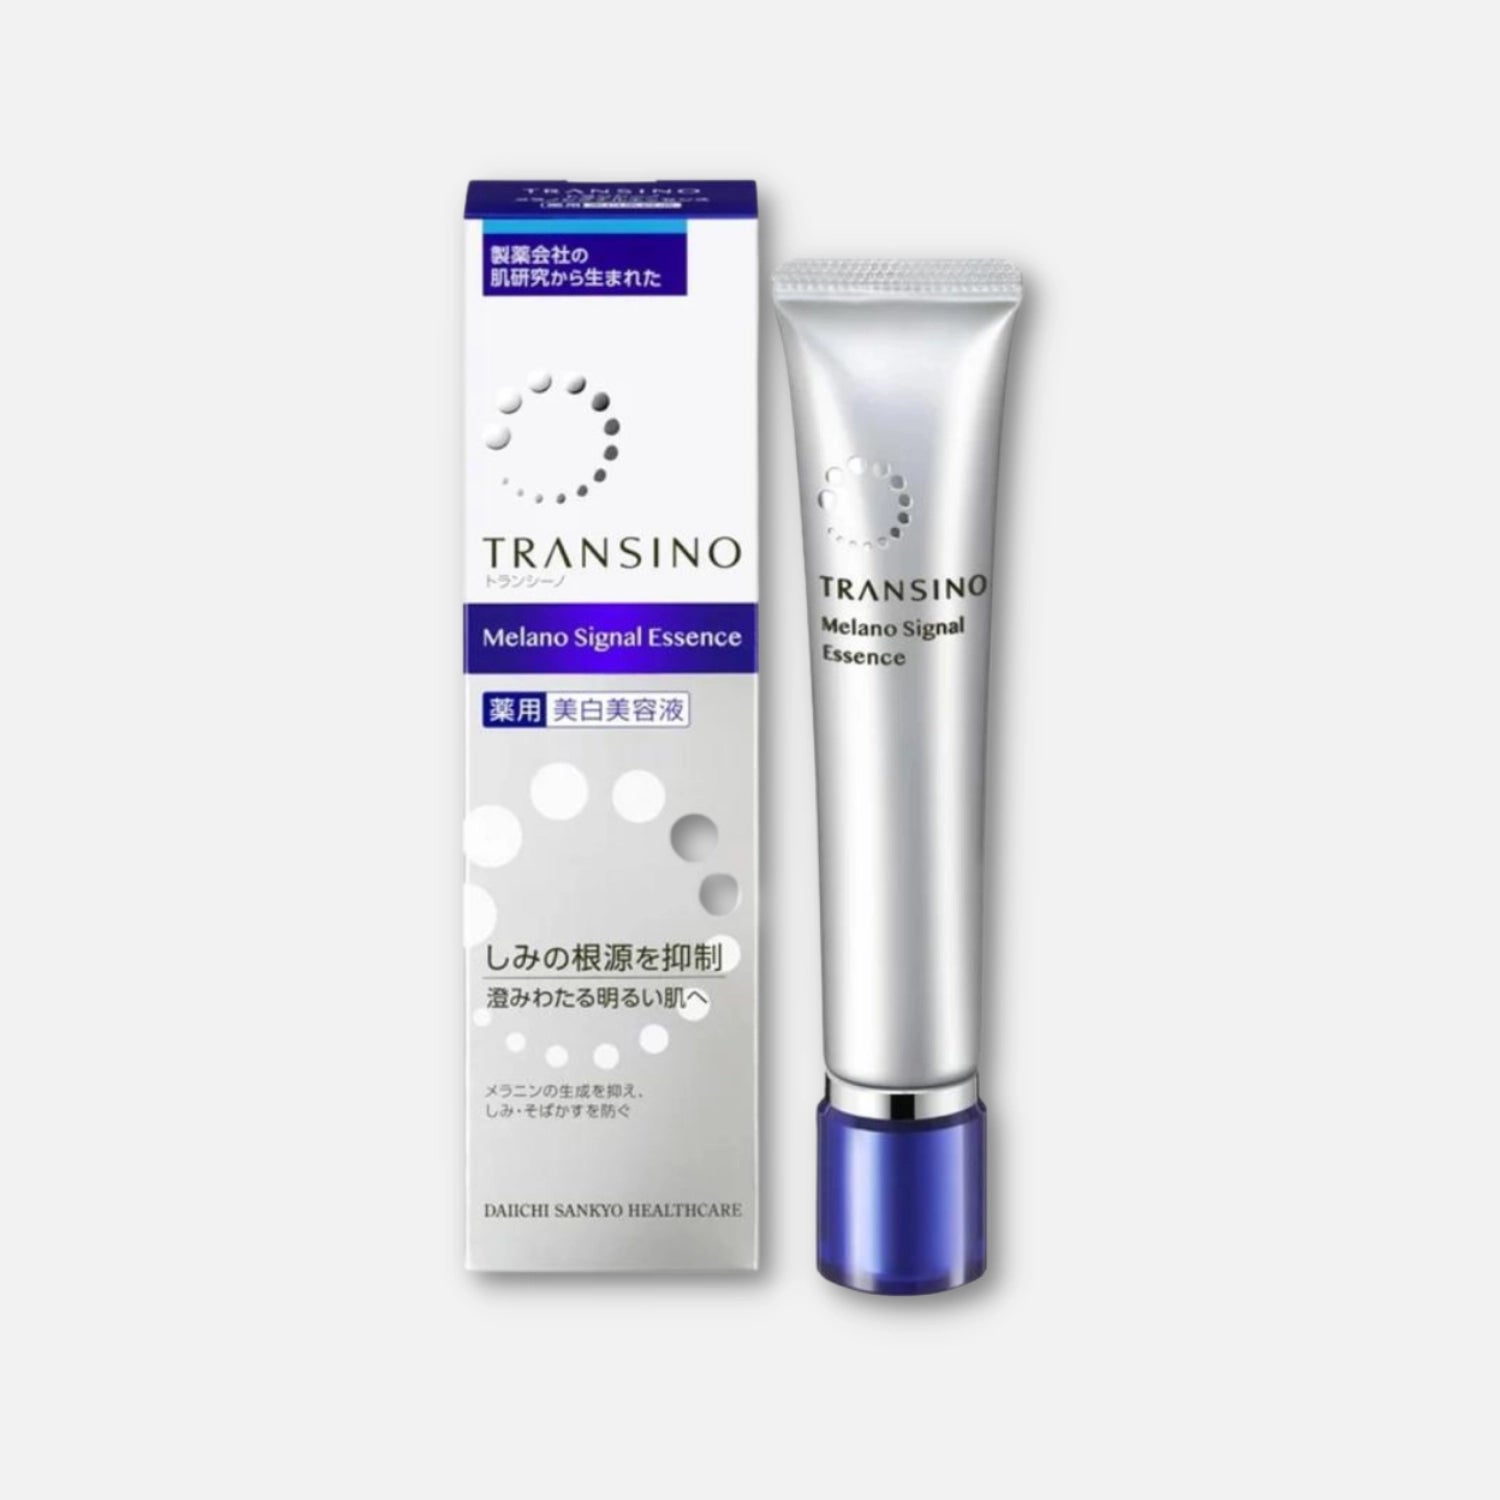 Transino Whitening Melano Signal Essence 30g/50g - Buy Me Japan